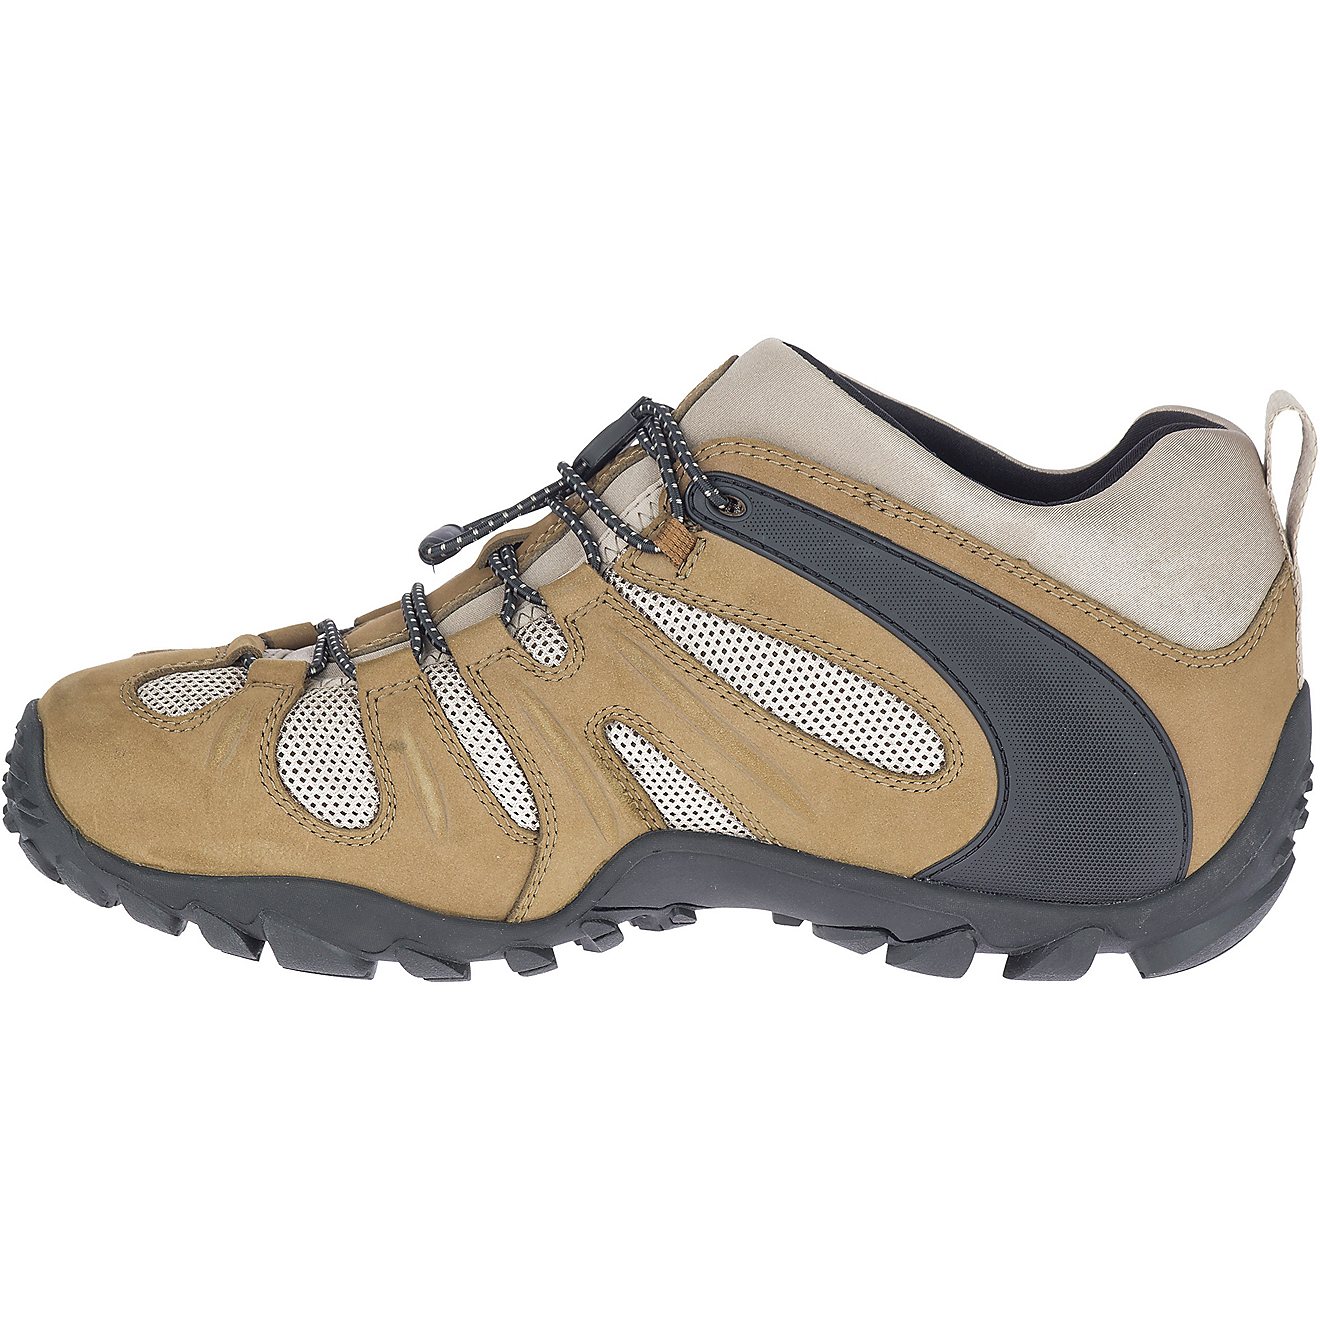 Merrell Chameleon II elástico j598323 trekking zapatos outdoorschuhe señores neuhait